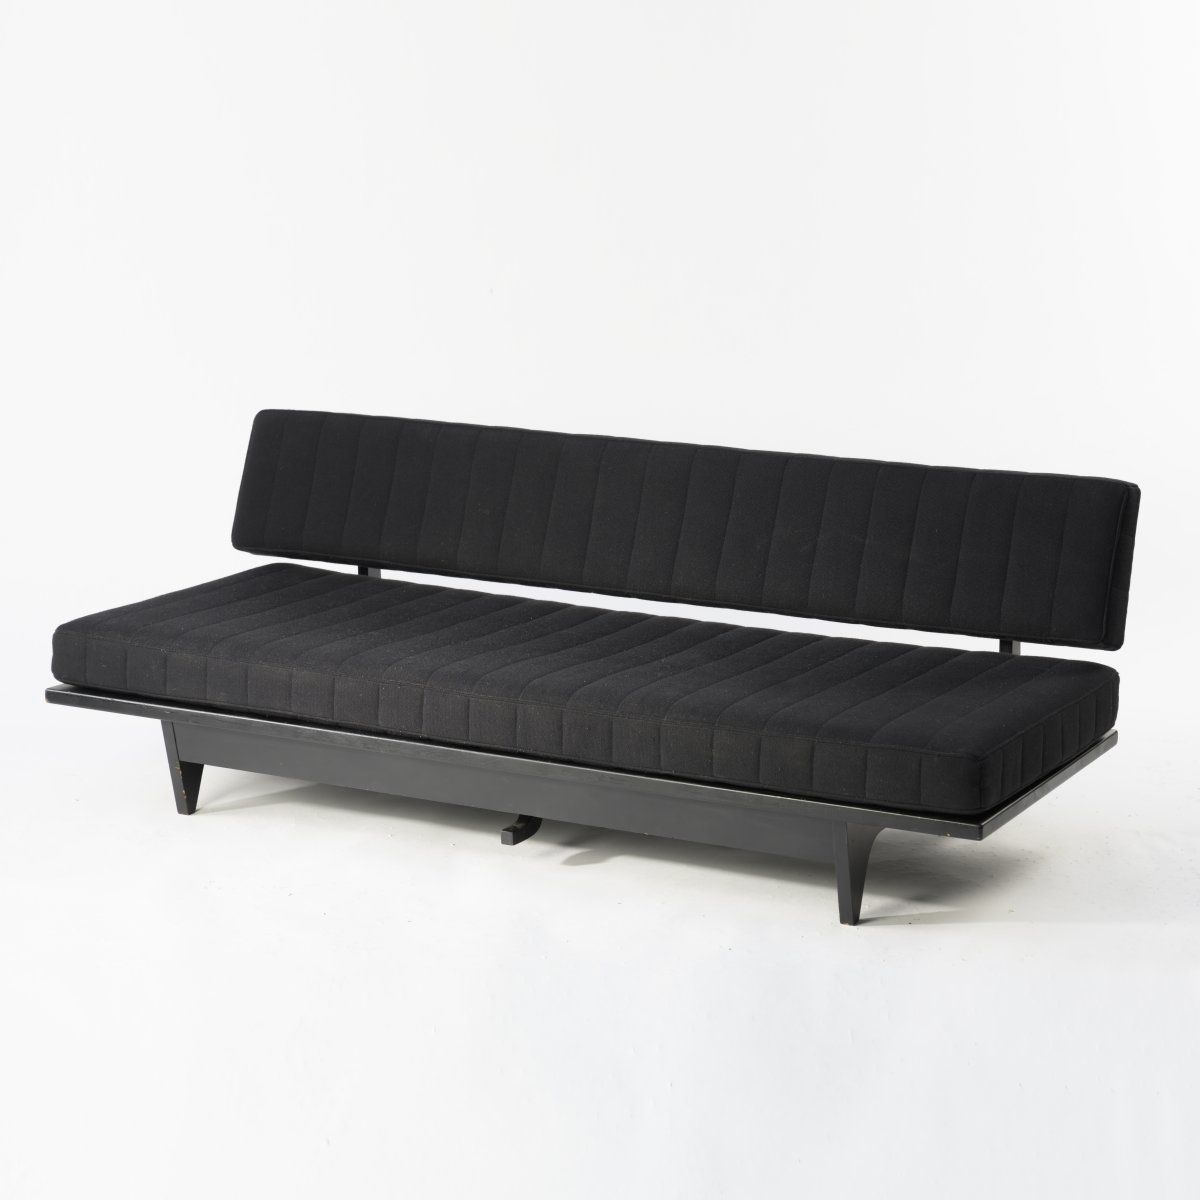 Null 理查德-斯坦，'700'沙发床，1947年，高68 x 195 x 93厘米。诺尔国际公司制造，纽约，1947-61。木头，胶合板，涂黑，黑色织物。有&hellip;